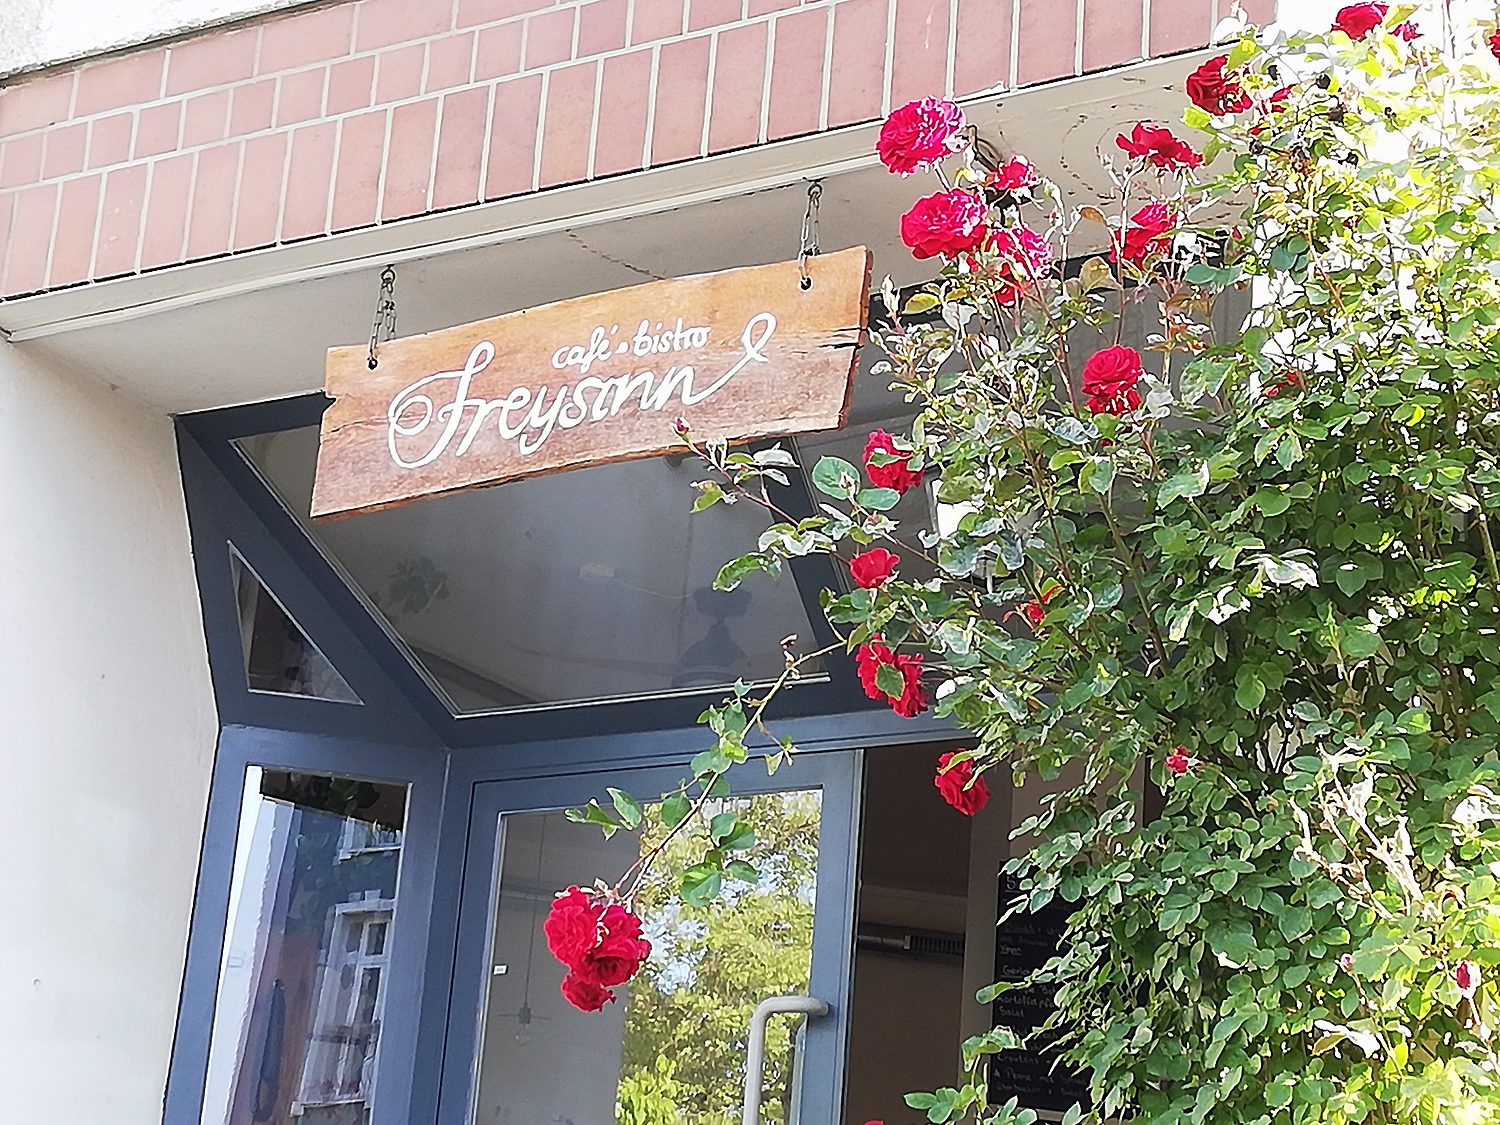 Café Freysinn, an der Eingangstür blühen die Rosen. Foto: Hensel